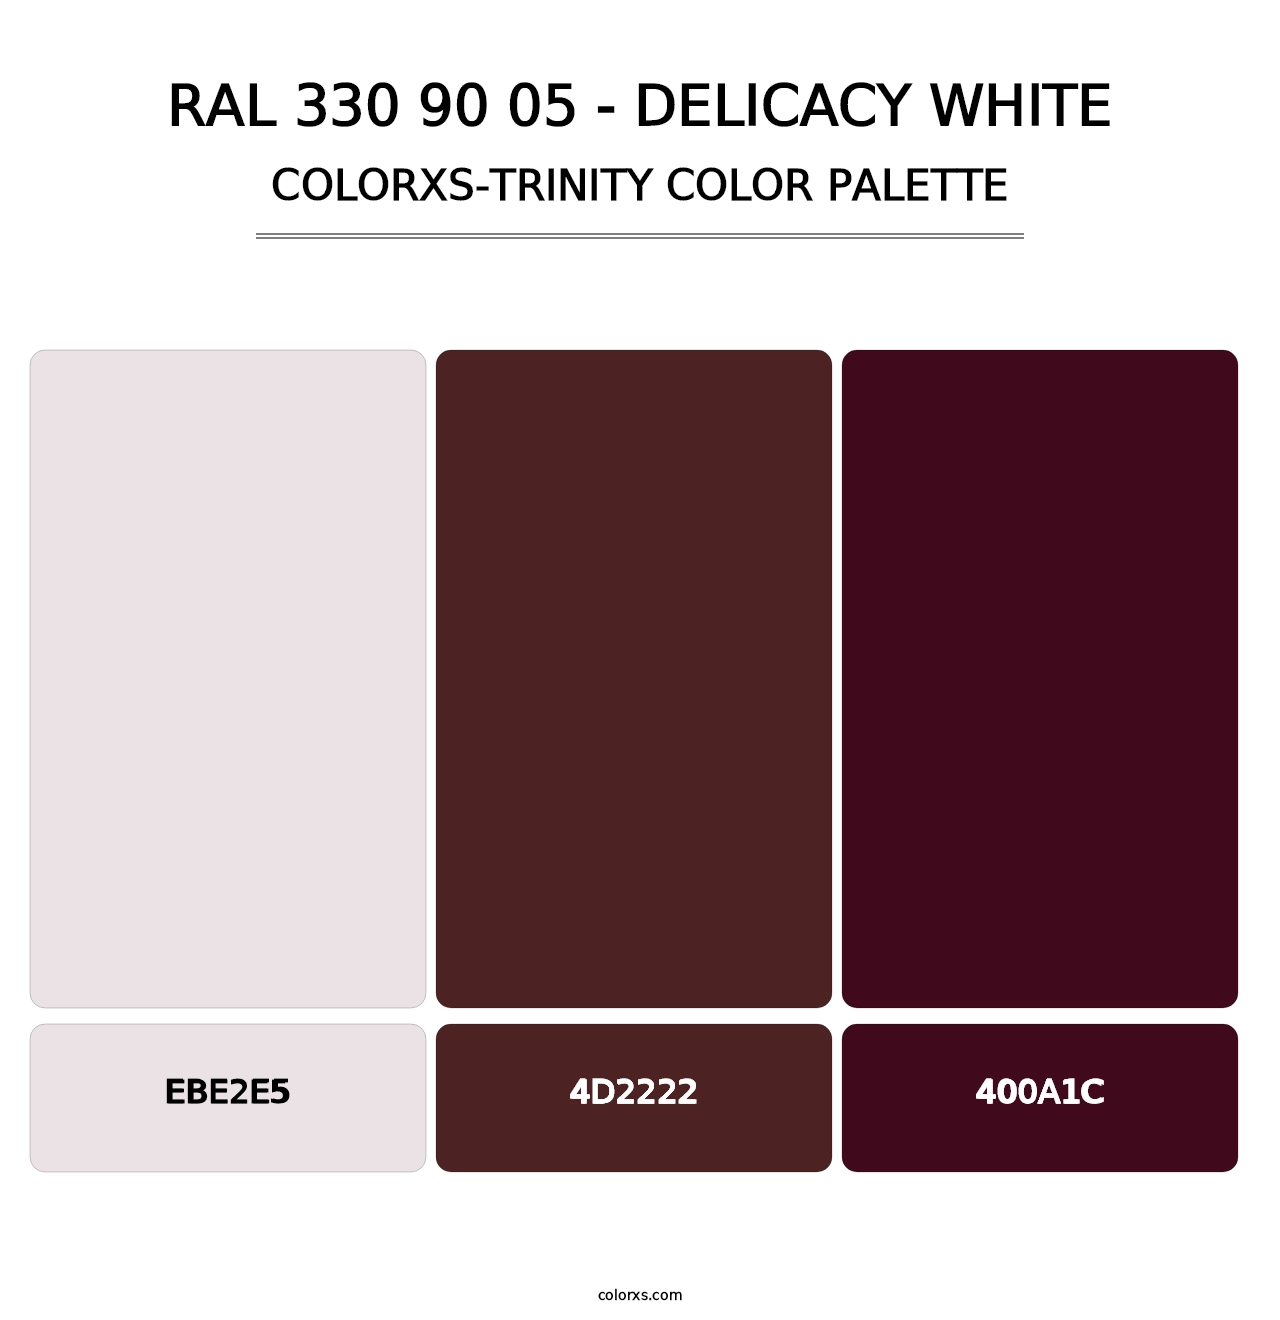 RAL 330 90 05 - Delicacy White - Colorxs Trinity Palette